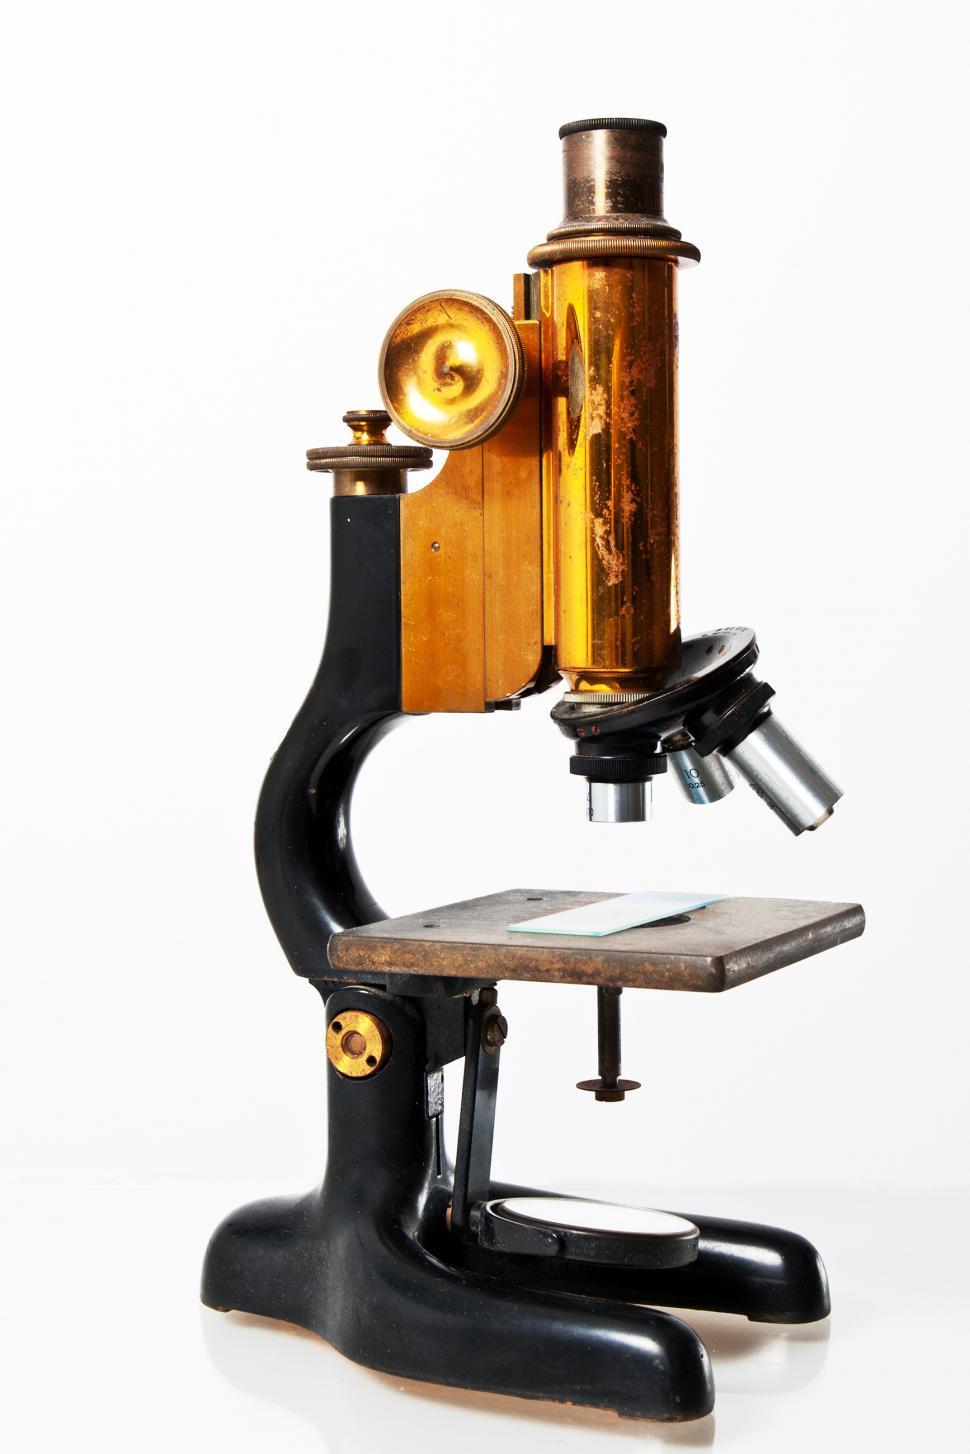 Free Image of Microscope 